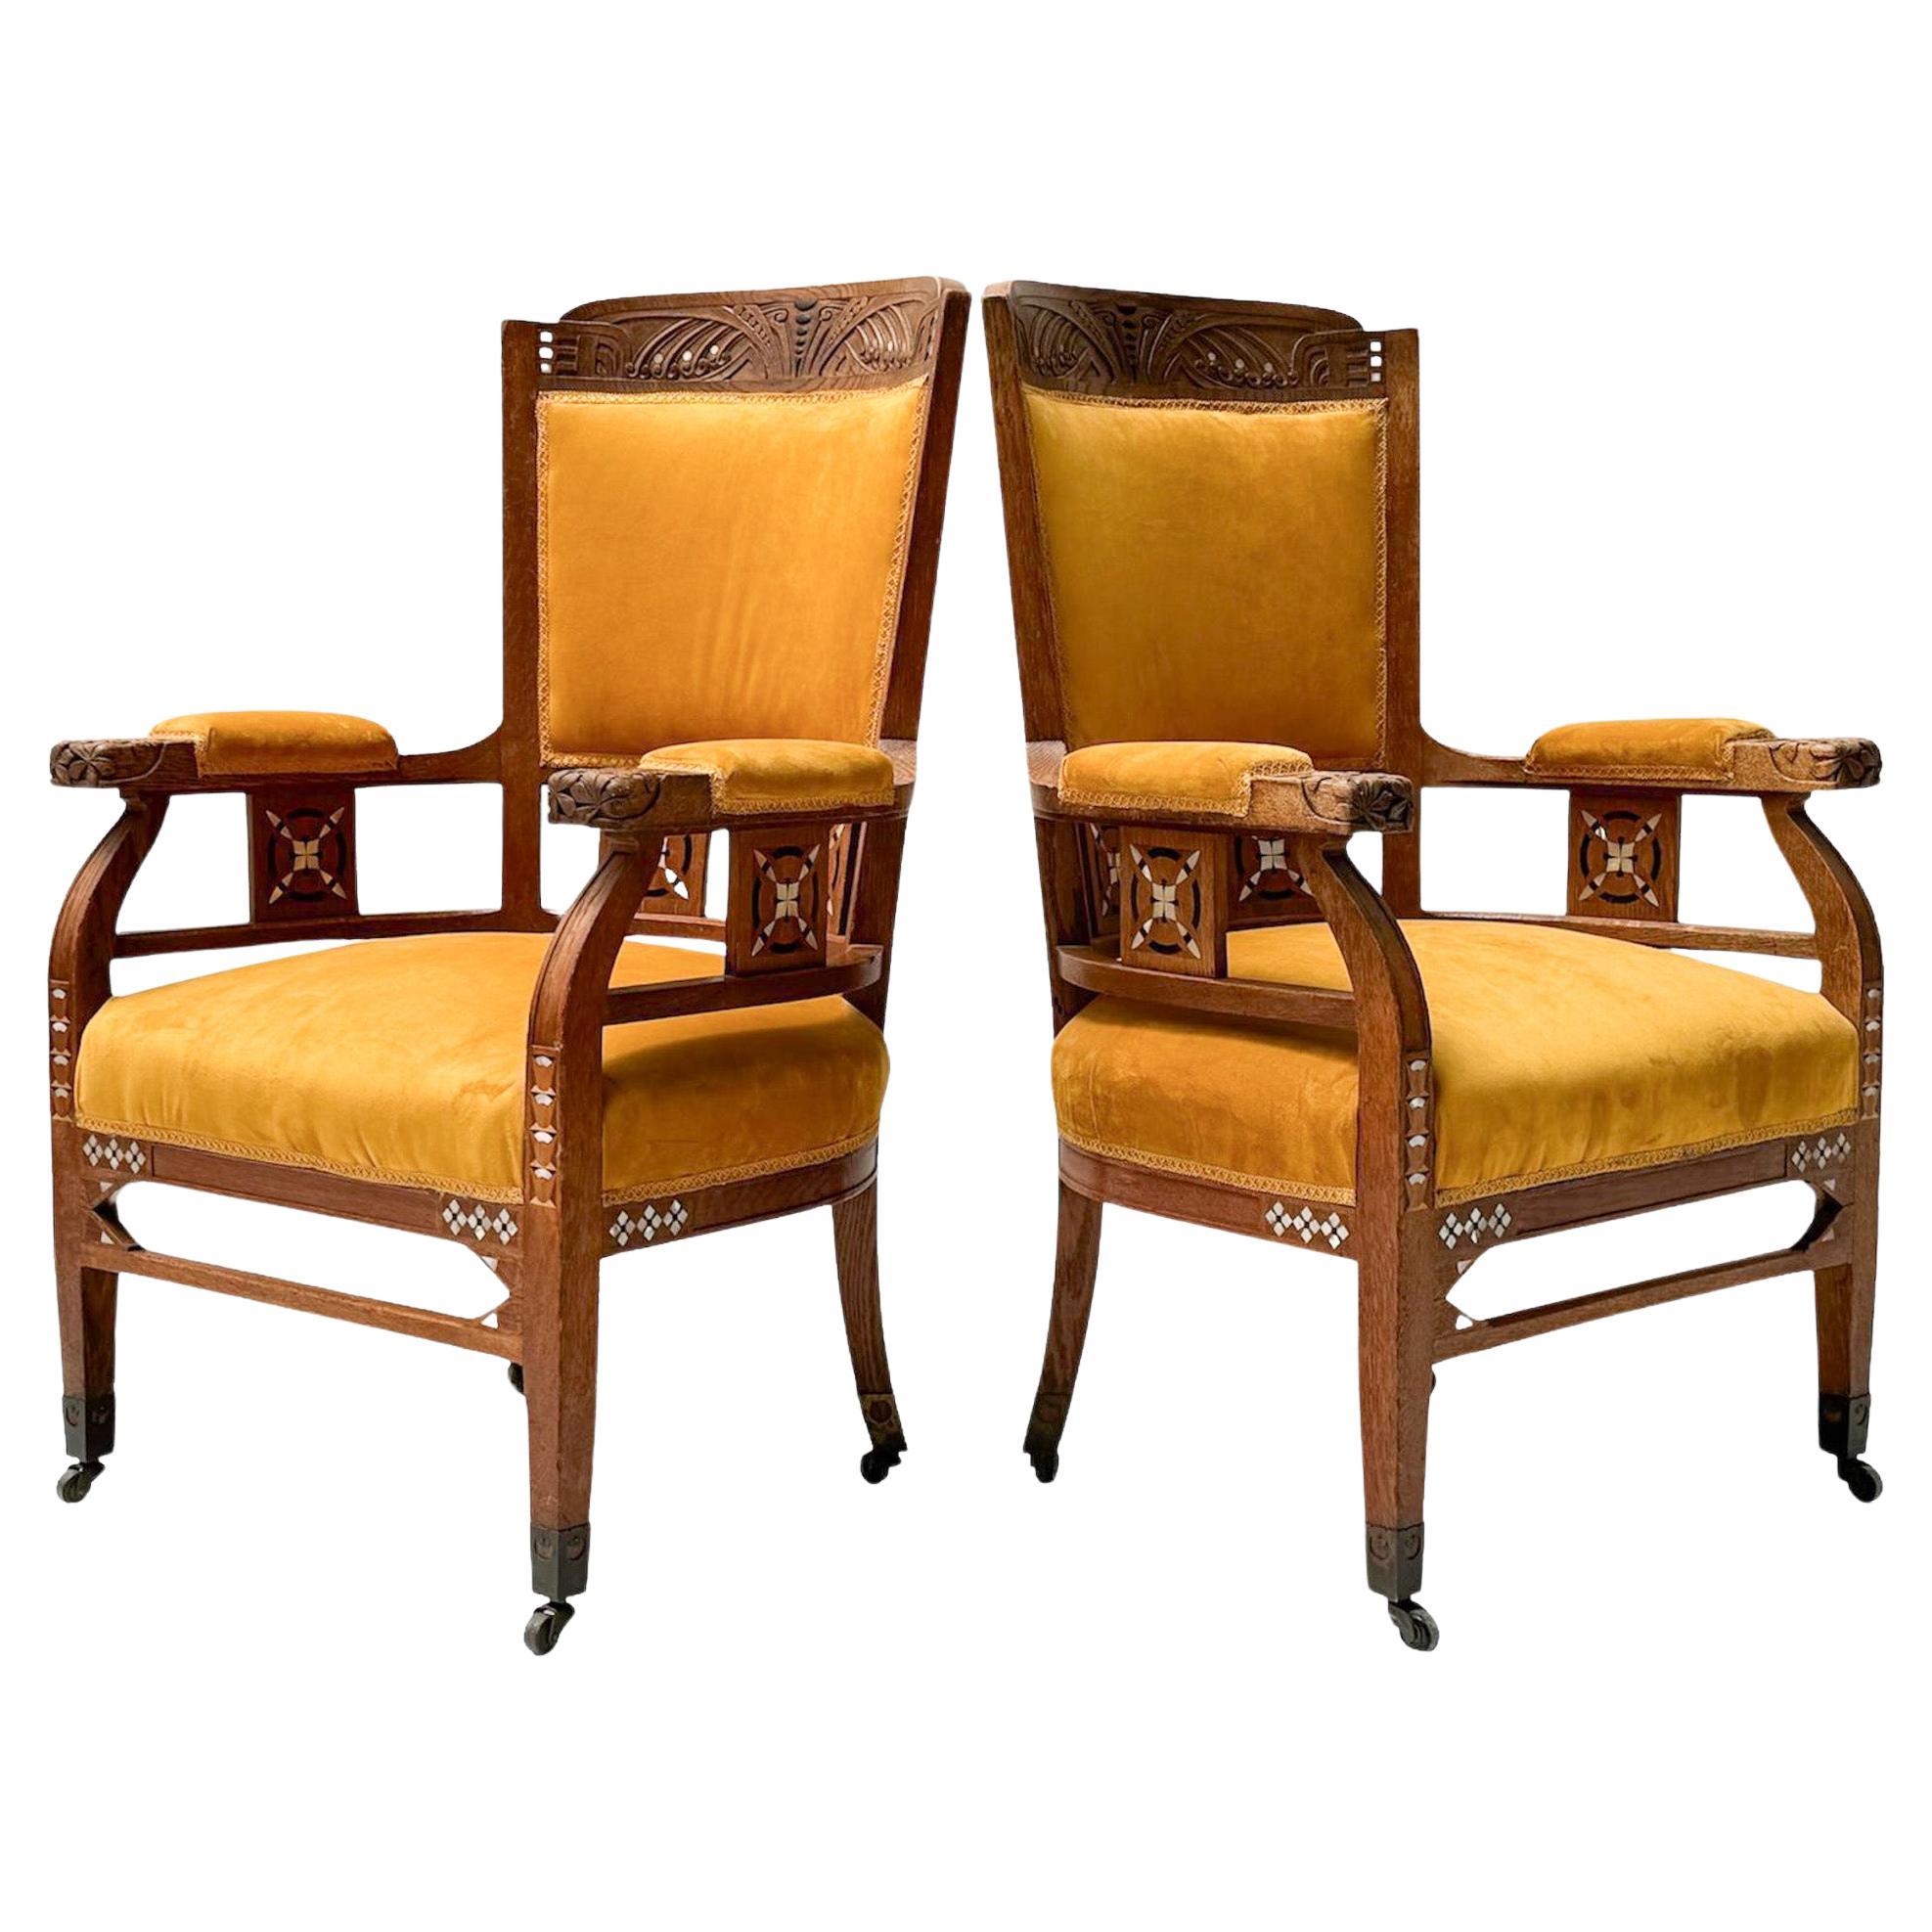 Two Oak Art Nouveau Arts & Crafts Armchairs by H.F. Jansen & Zonen Amsterdam For Sale